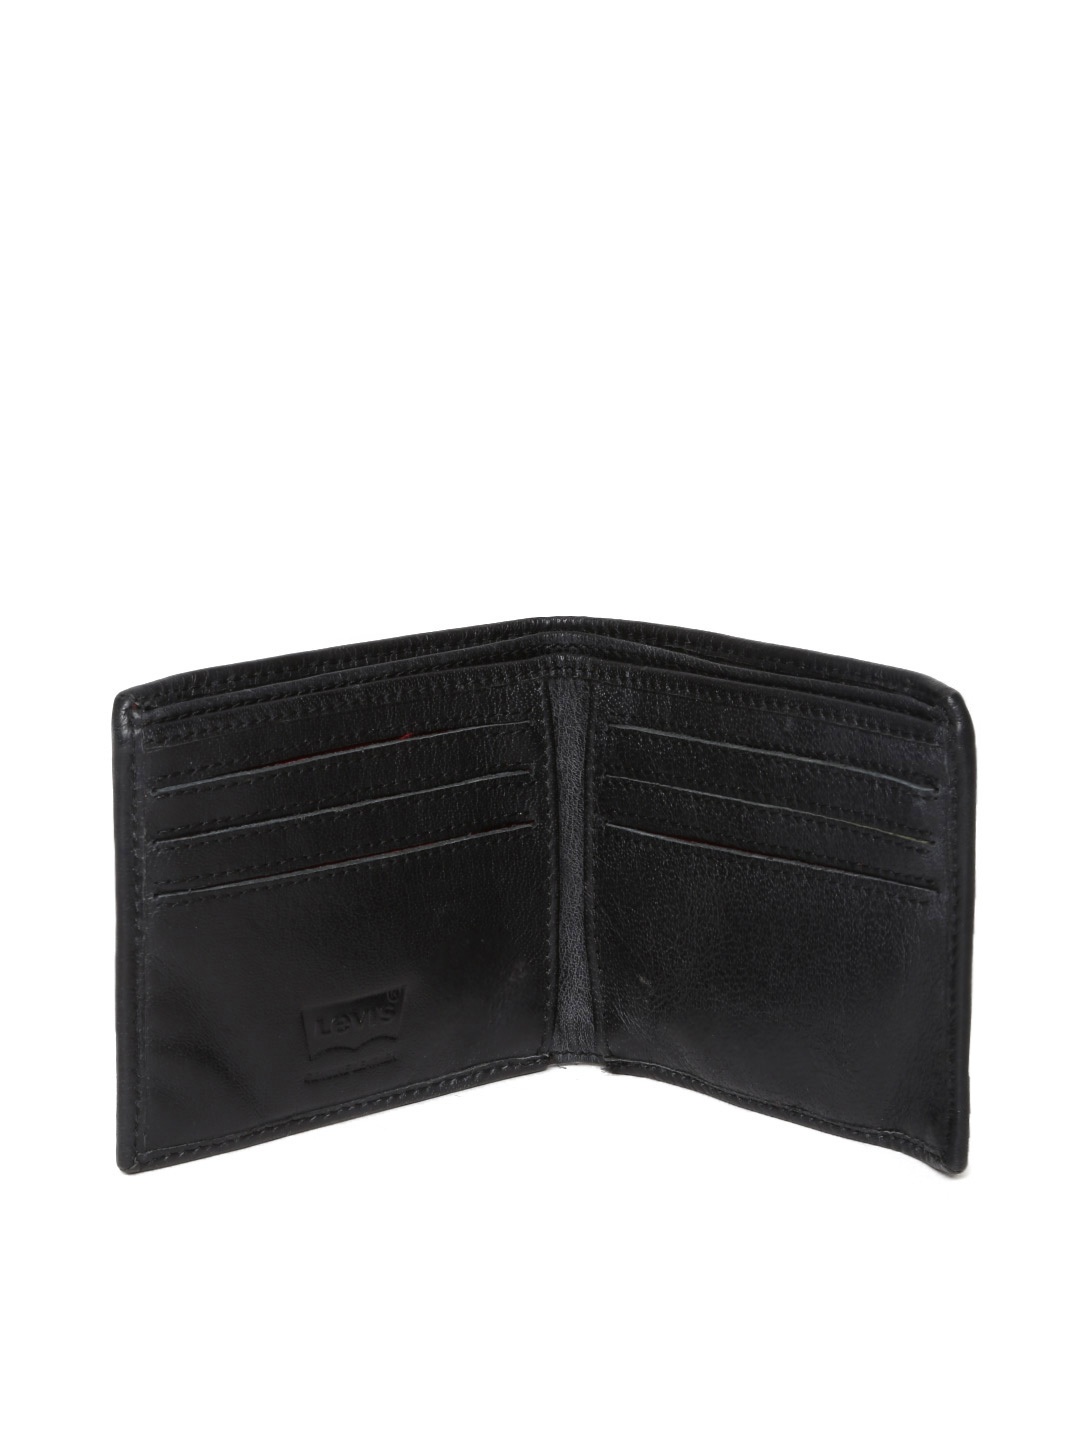 Myntra Levis Men Black Leather Wallet 267347 | Buy Myntra Levis Wallets at best price online ...